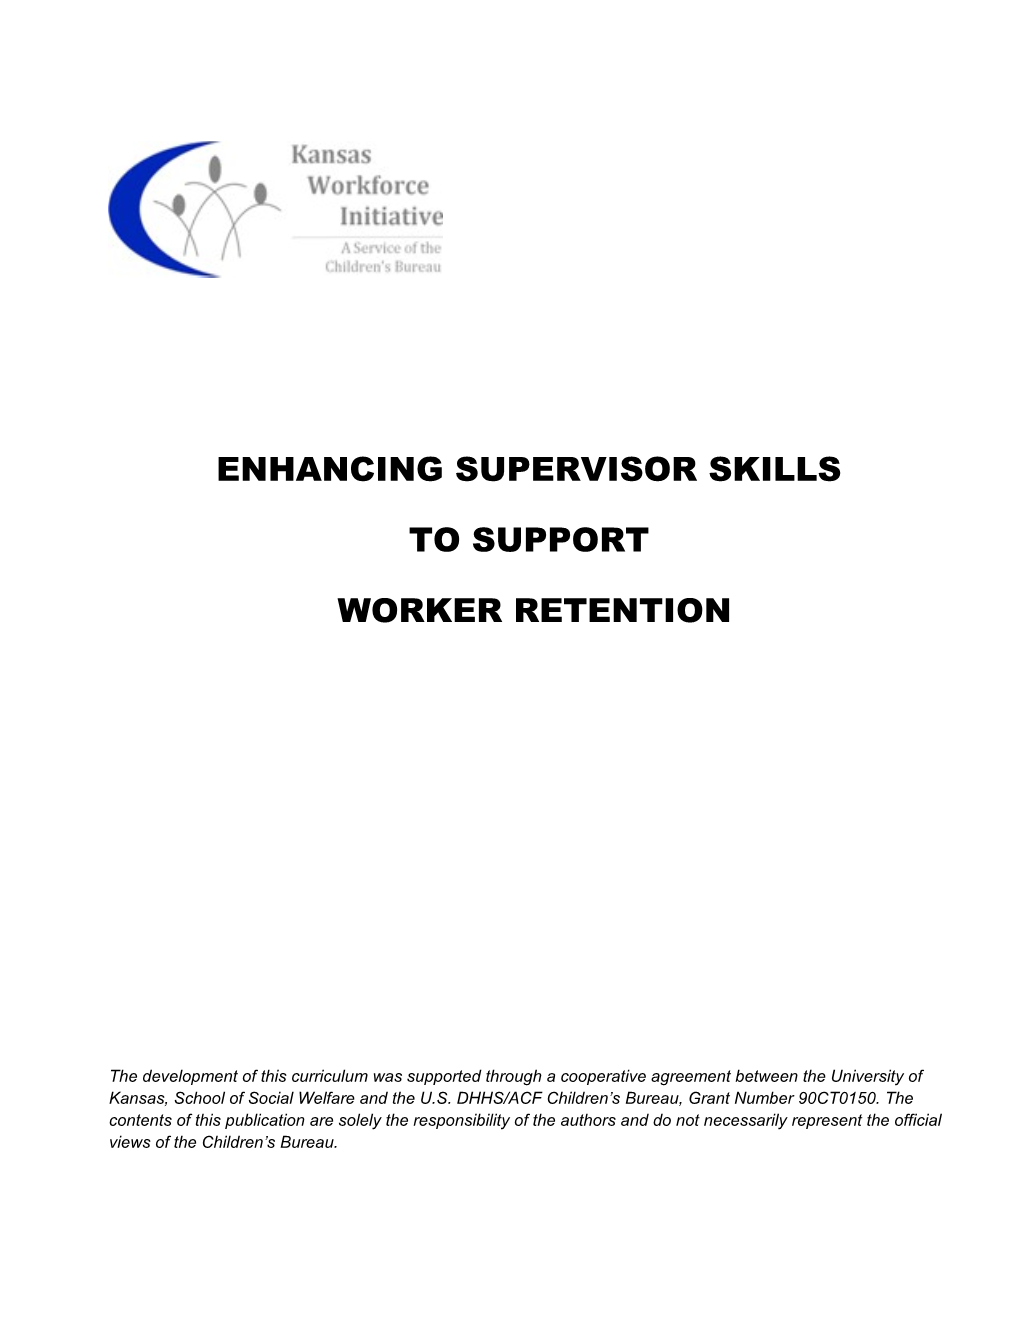 Enhancing Supervisor Skills